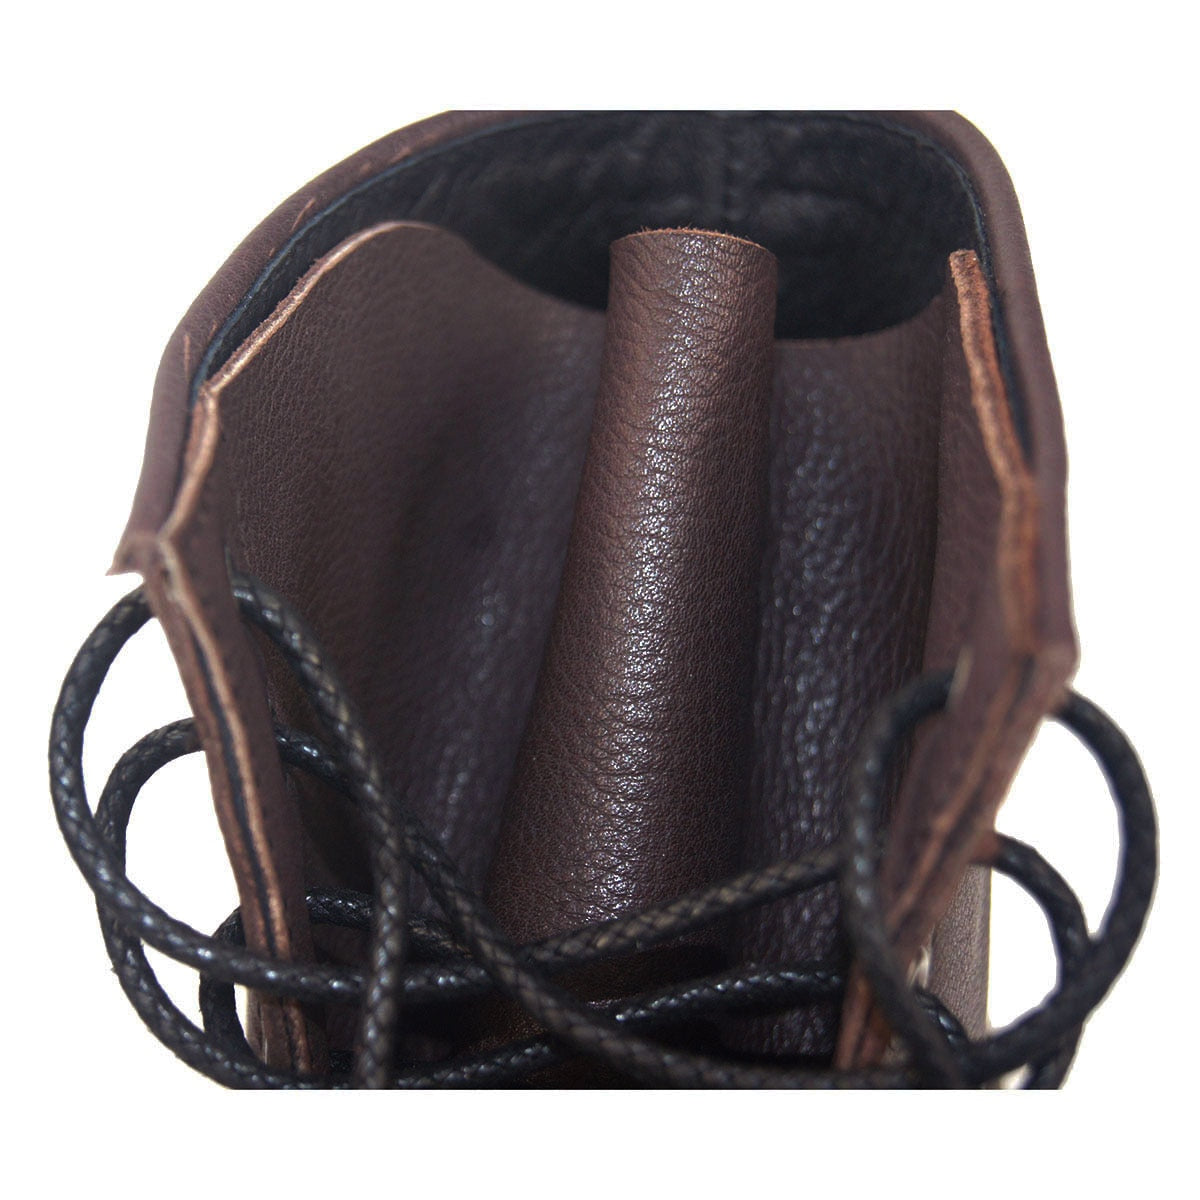 Baldwin Men Zipper  Genuine Leather Boots